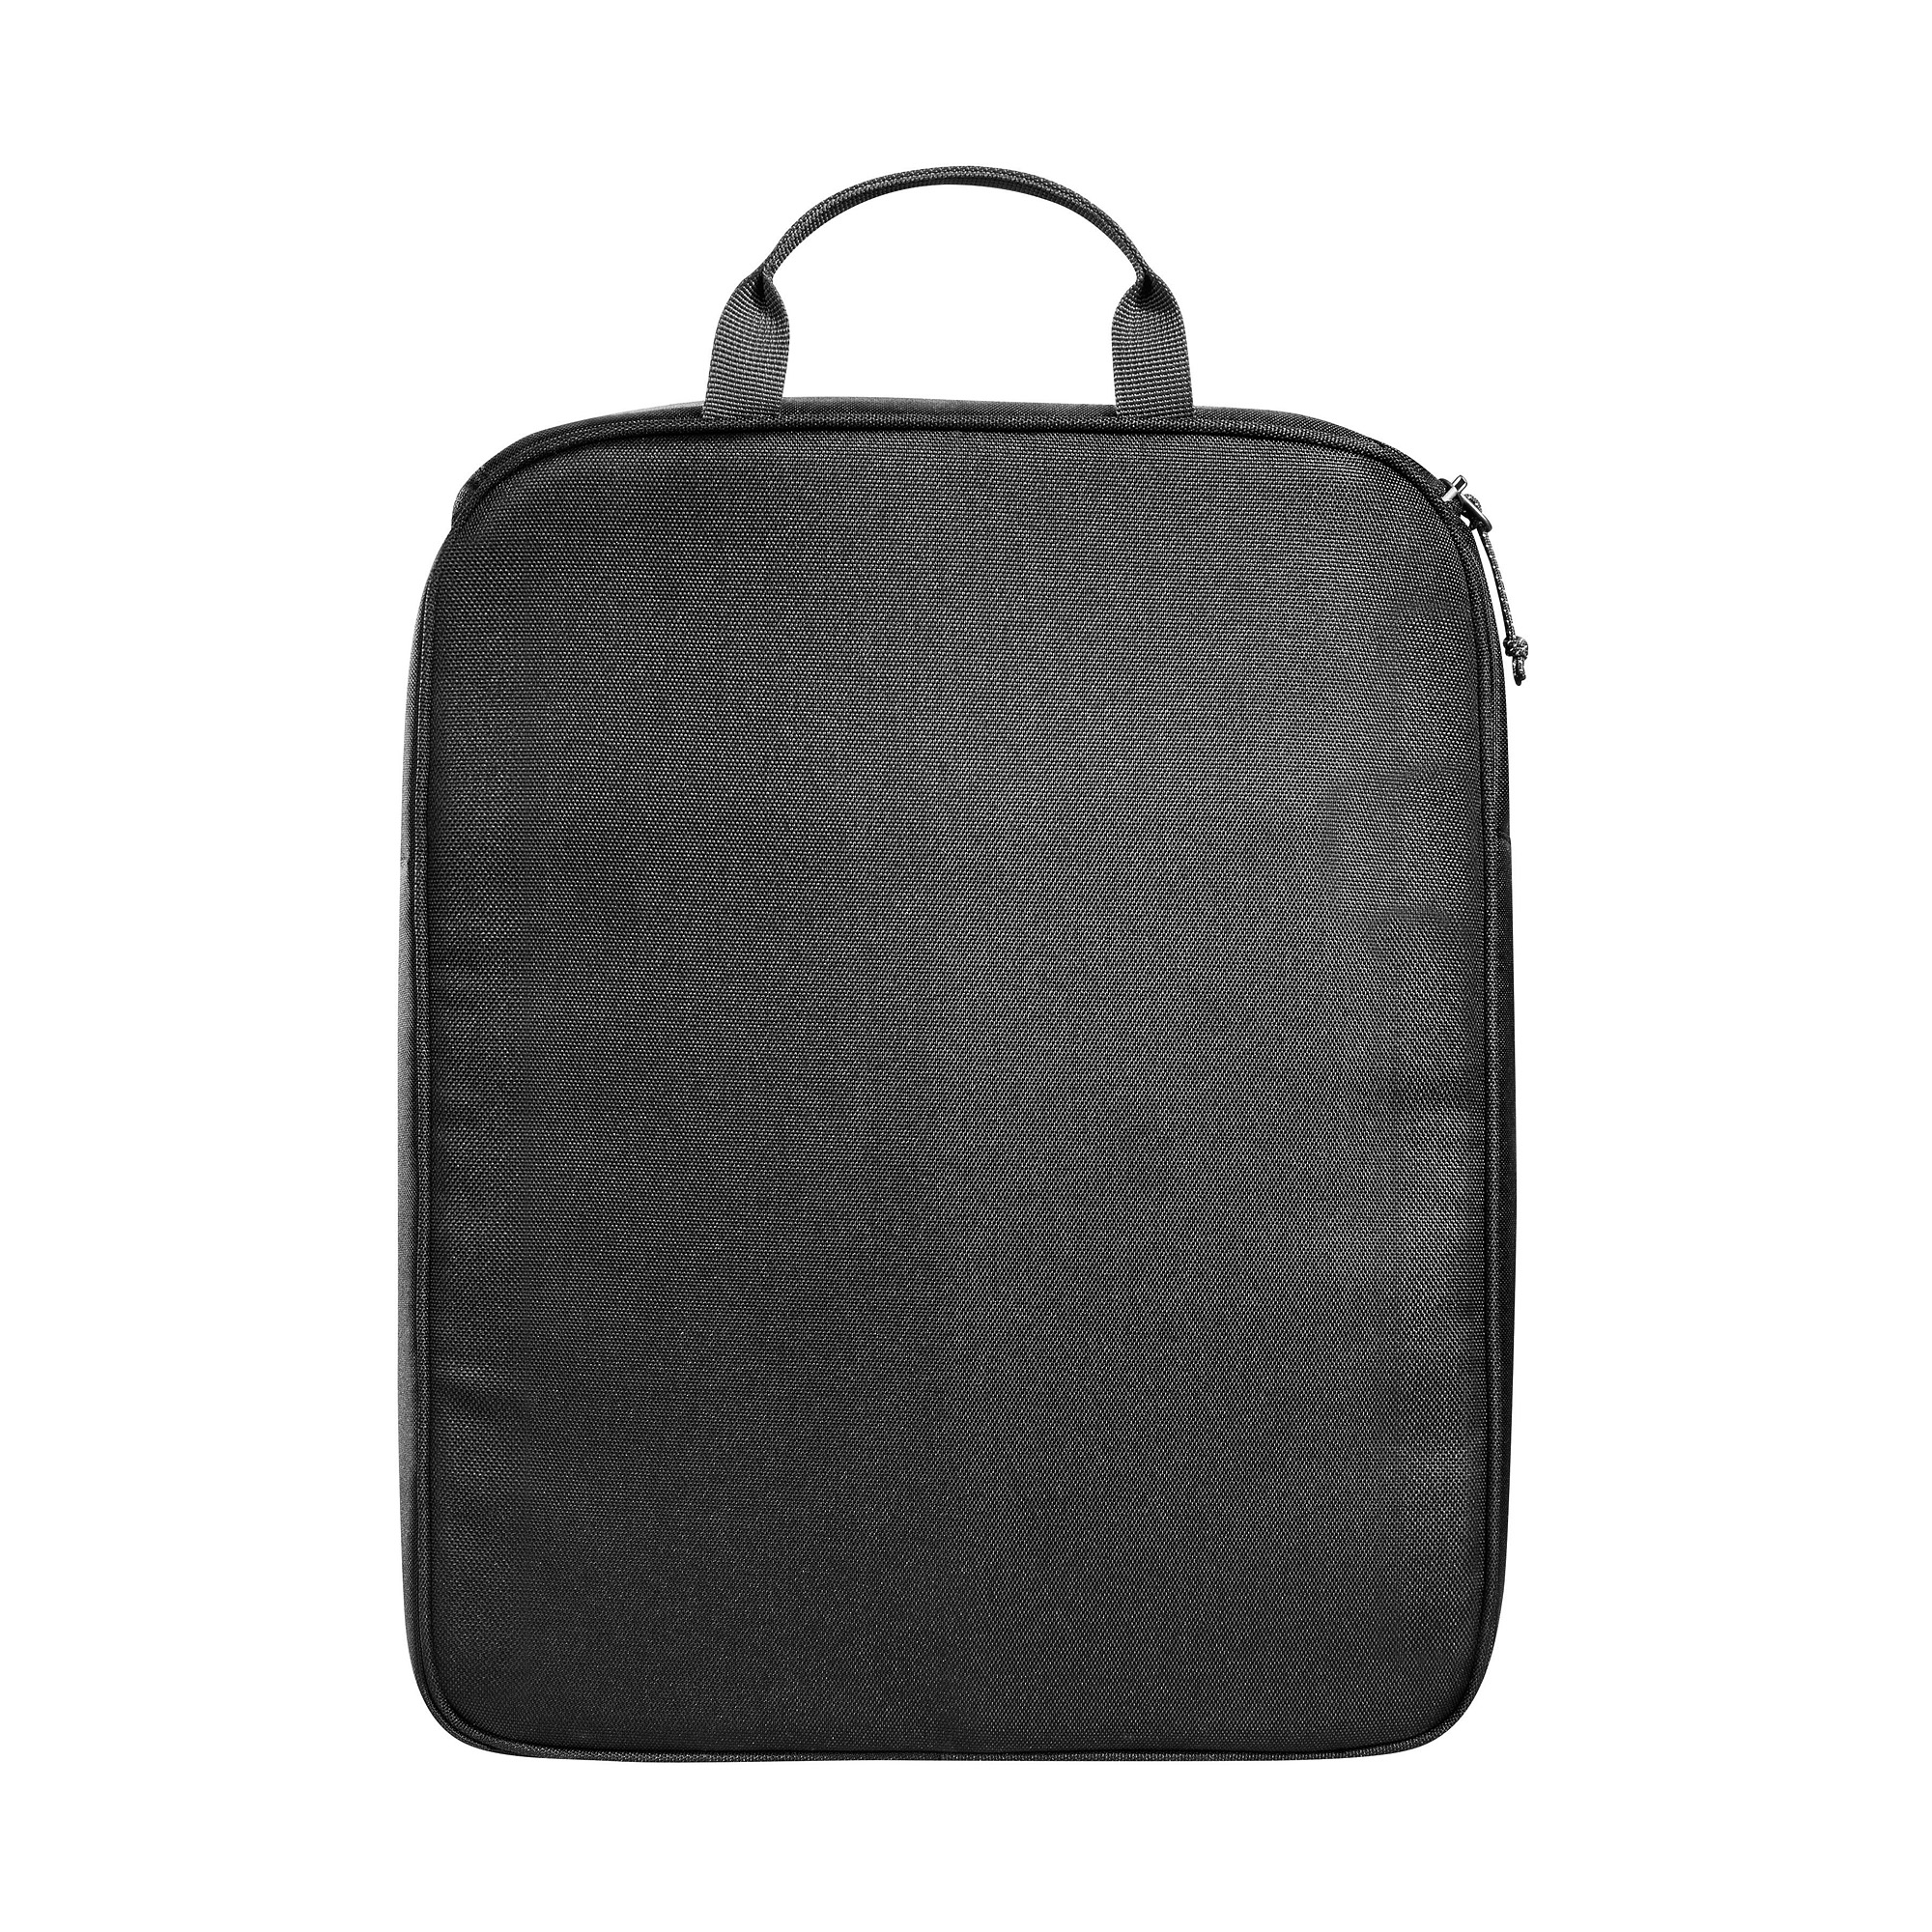 Tatonka Cooler Bag M off black schwarz Sonstige Taschen 4013236336337